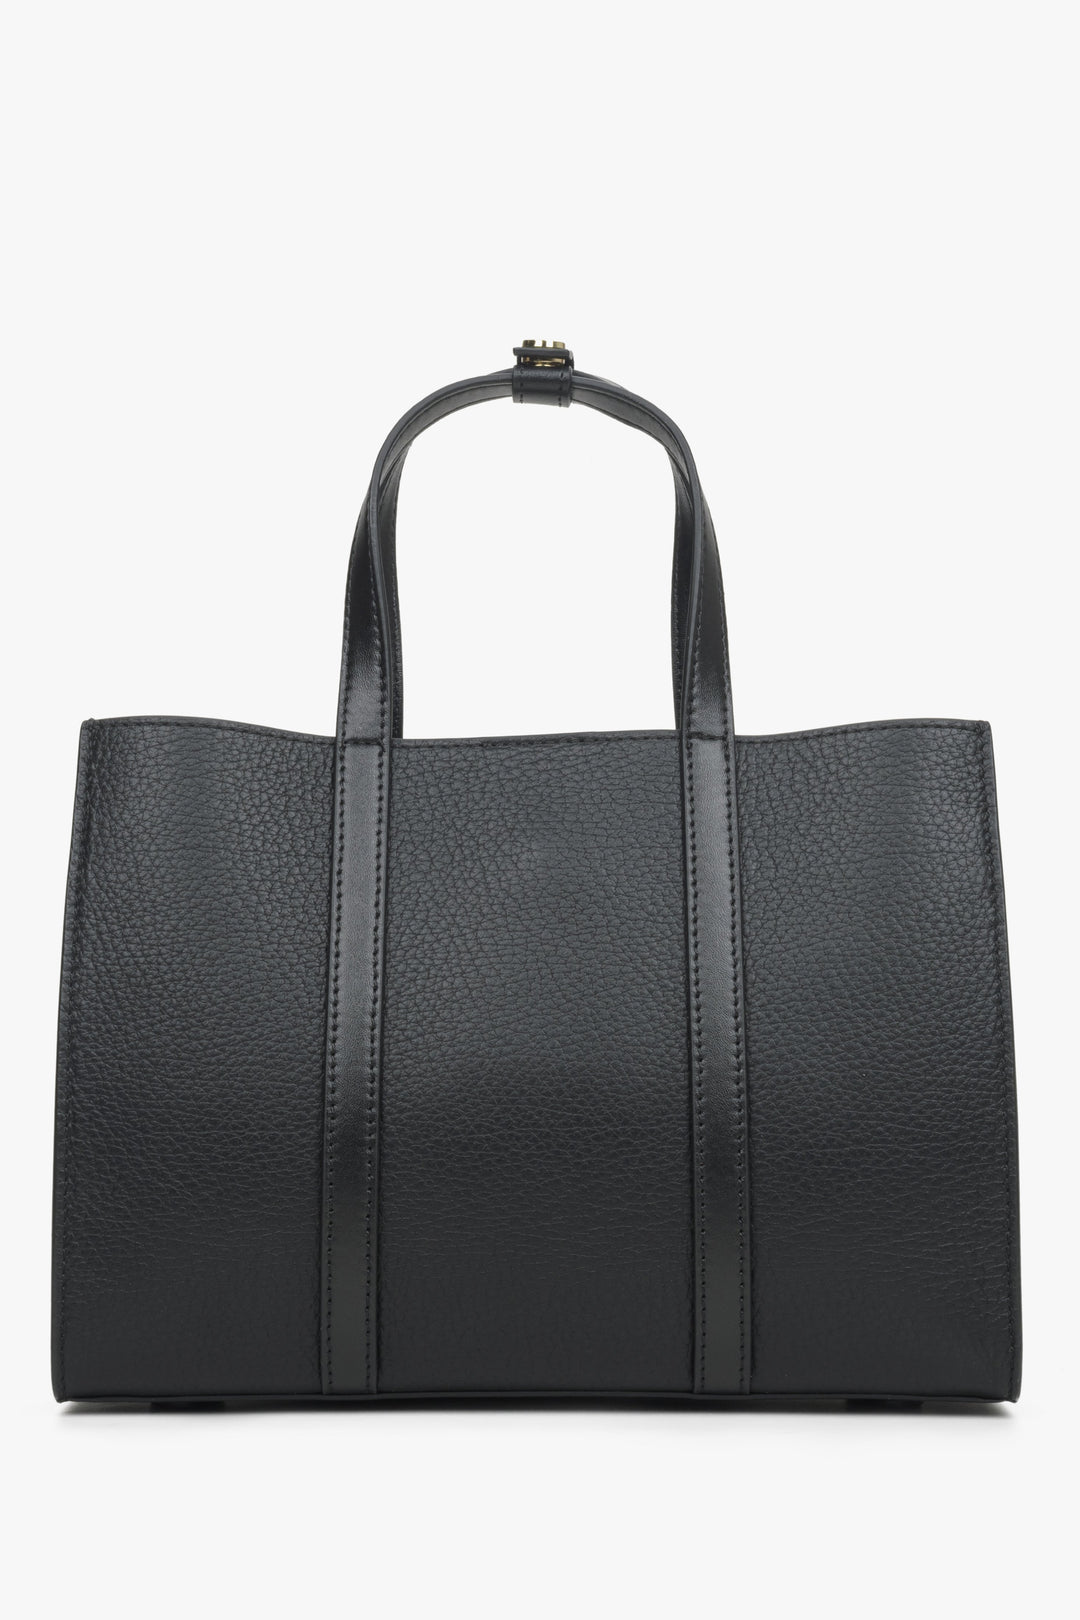 Black leather shopper bag by Estro.